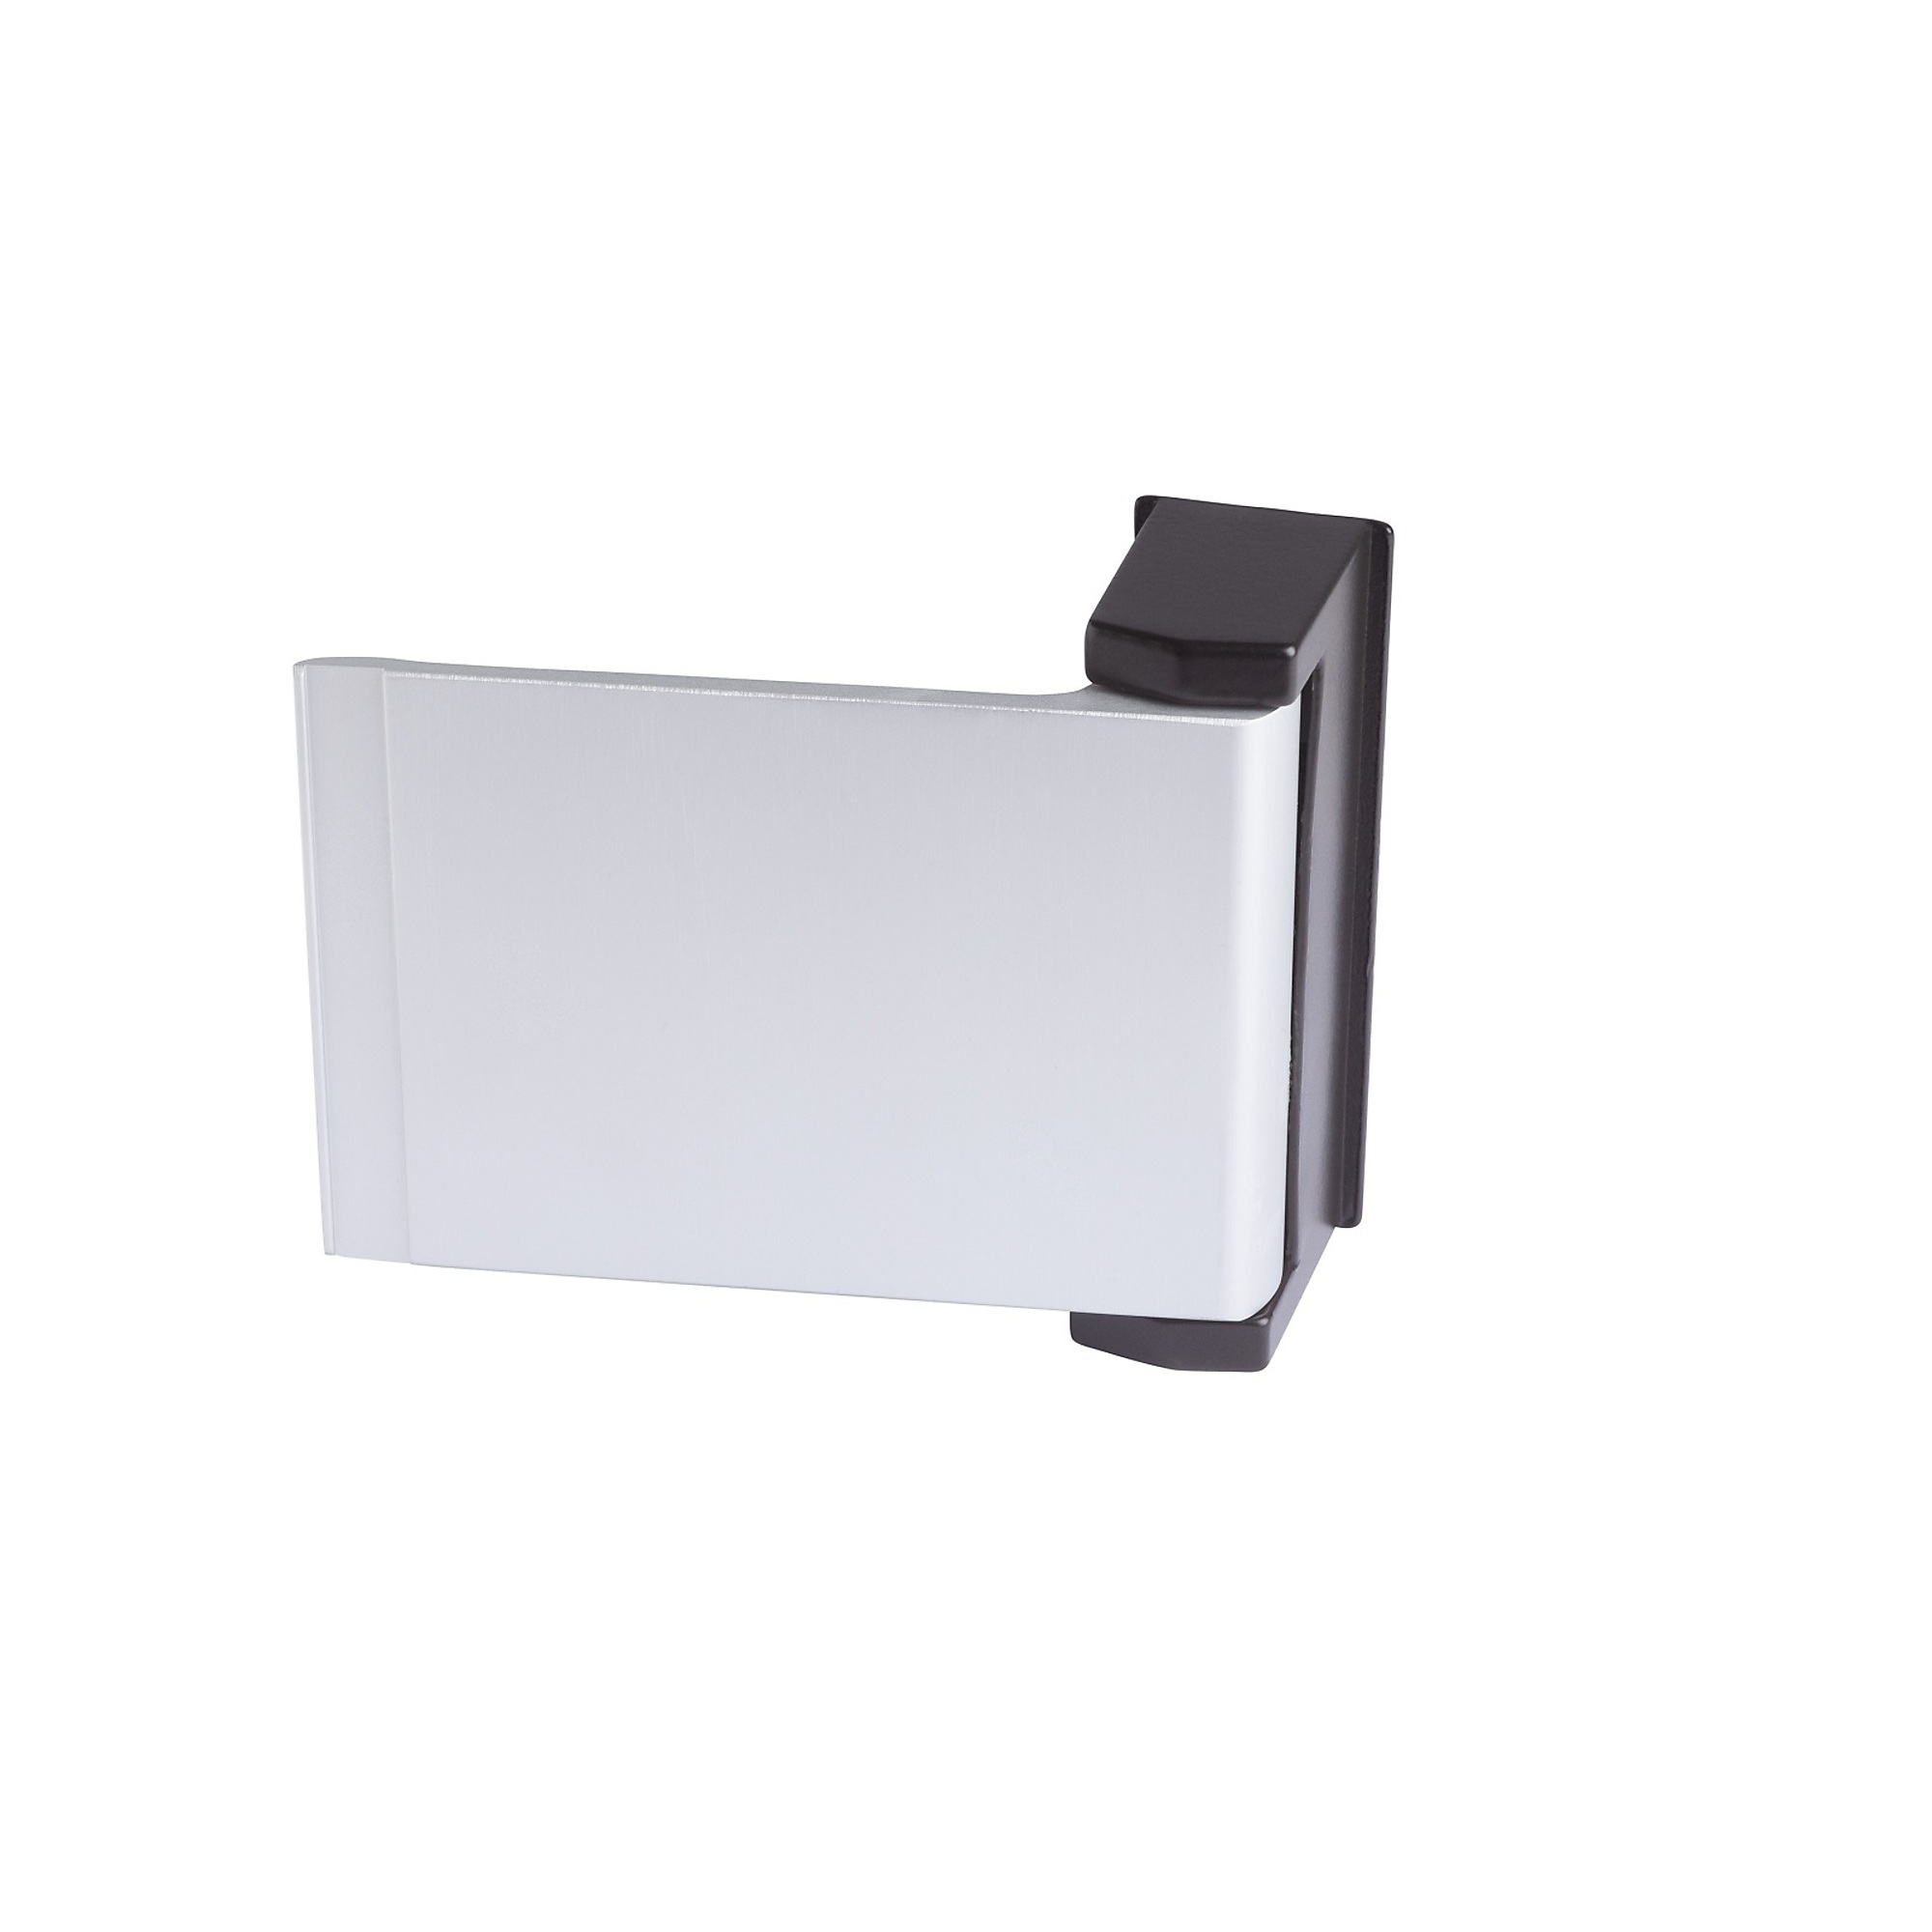 Global Door Controls, Aluminum Storefront 4 Way Reversible Push Paddle, Model TH1100-PUSH-AL